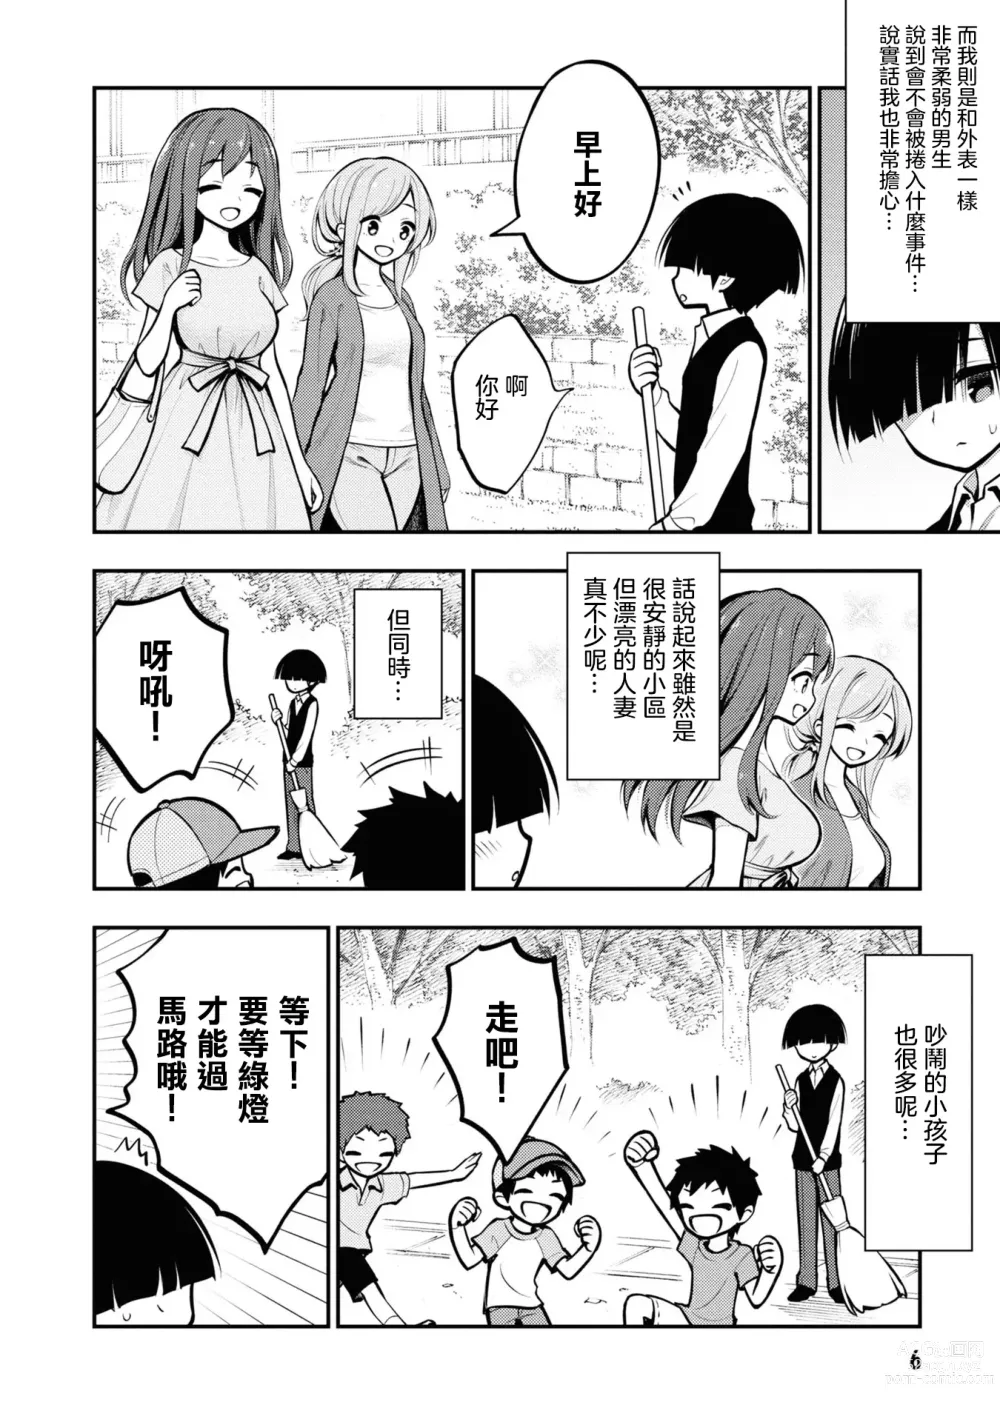 Page 9 of manga 淫獄小區 VOL.1